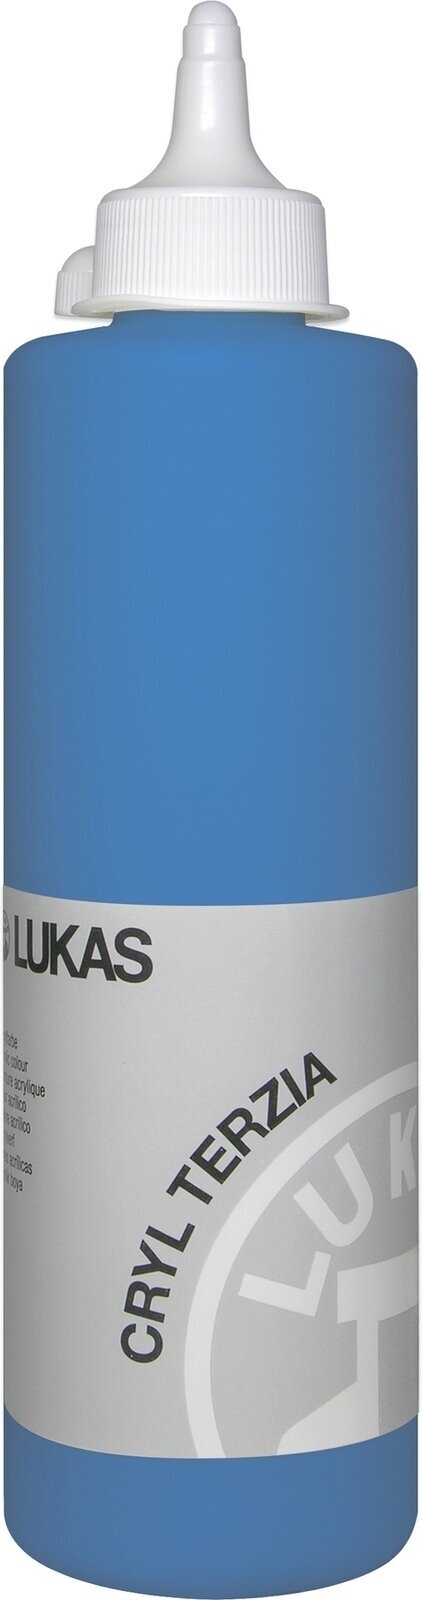 Acrylic Paint Lukas Cryl Terzia Acrylic Paint Plastic Bottle Acrylic Paint Primary Blue 500 ml 1 pc